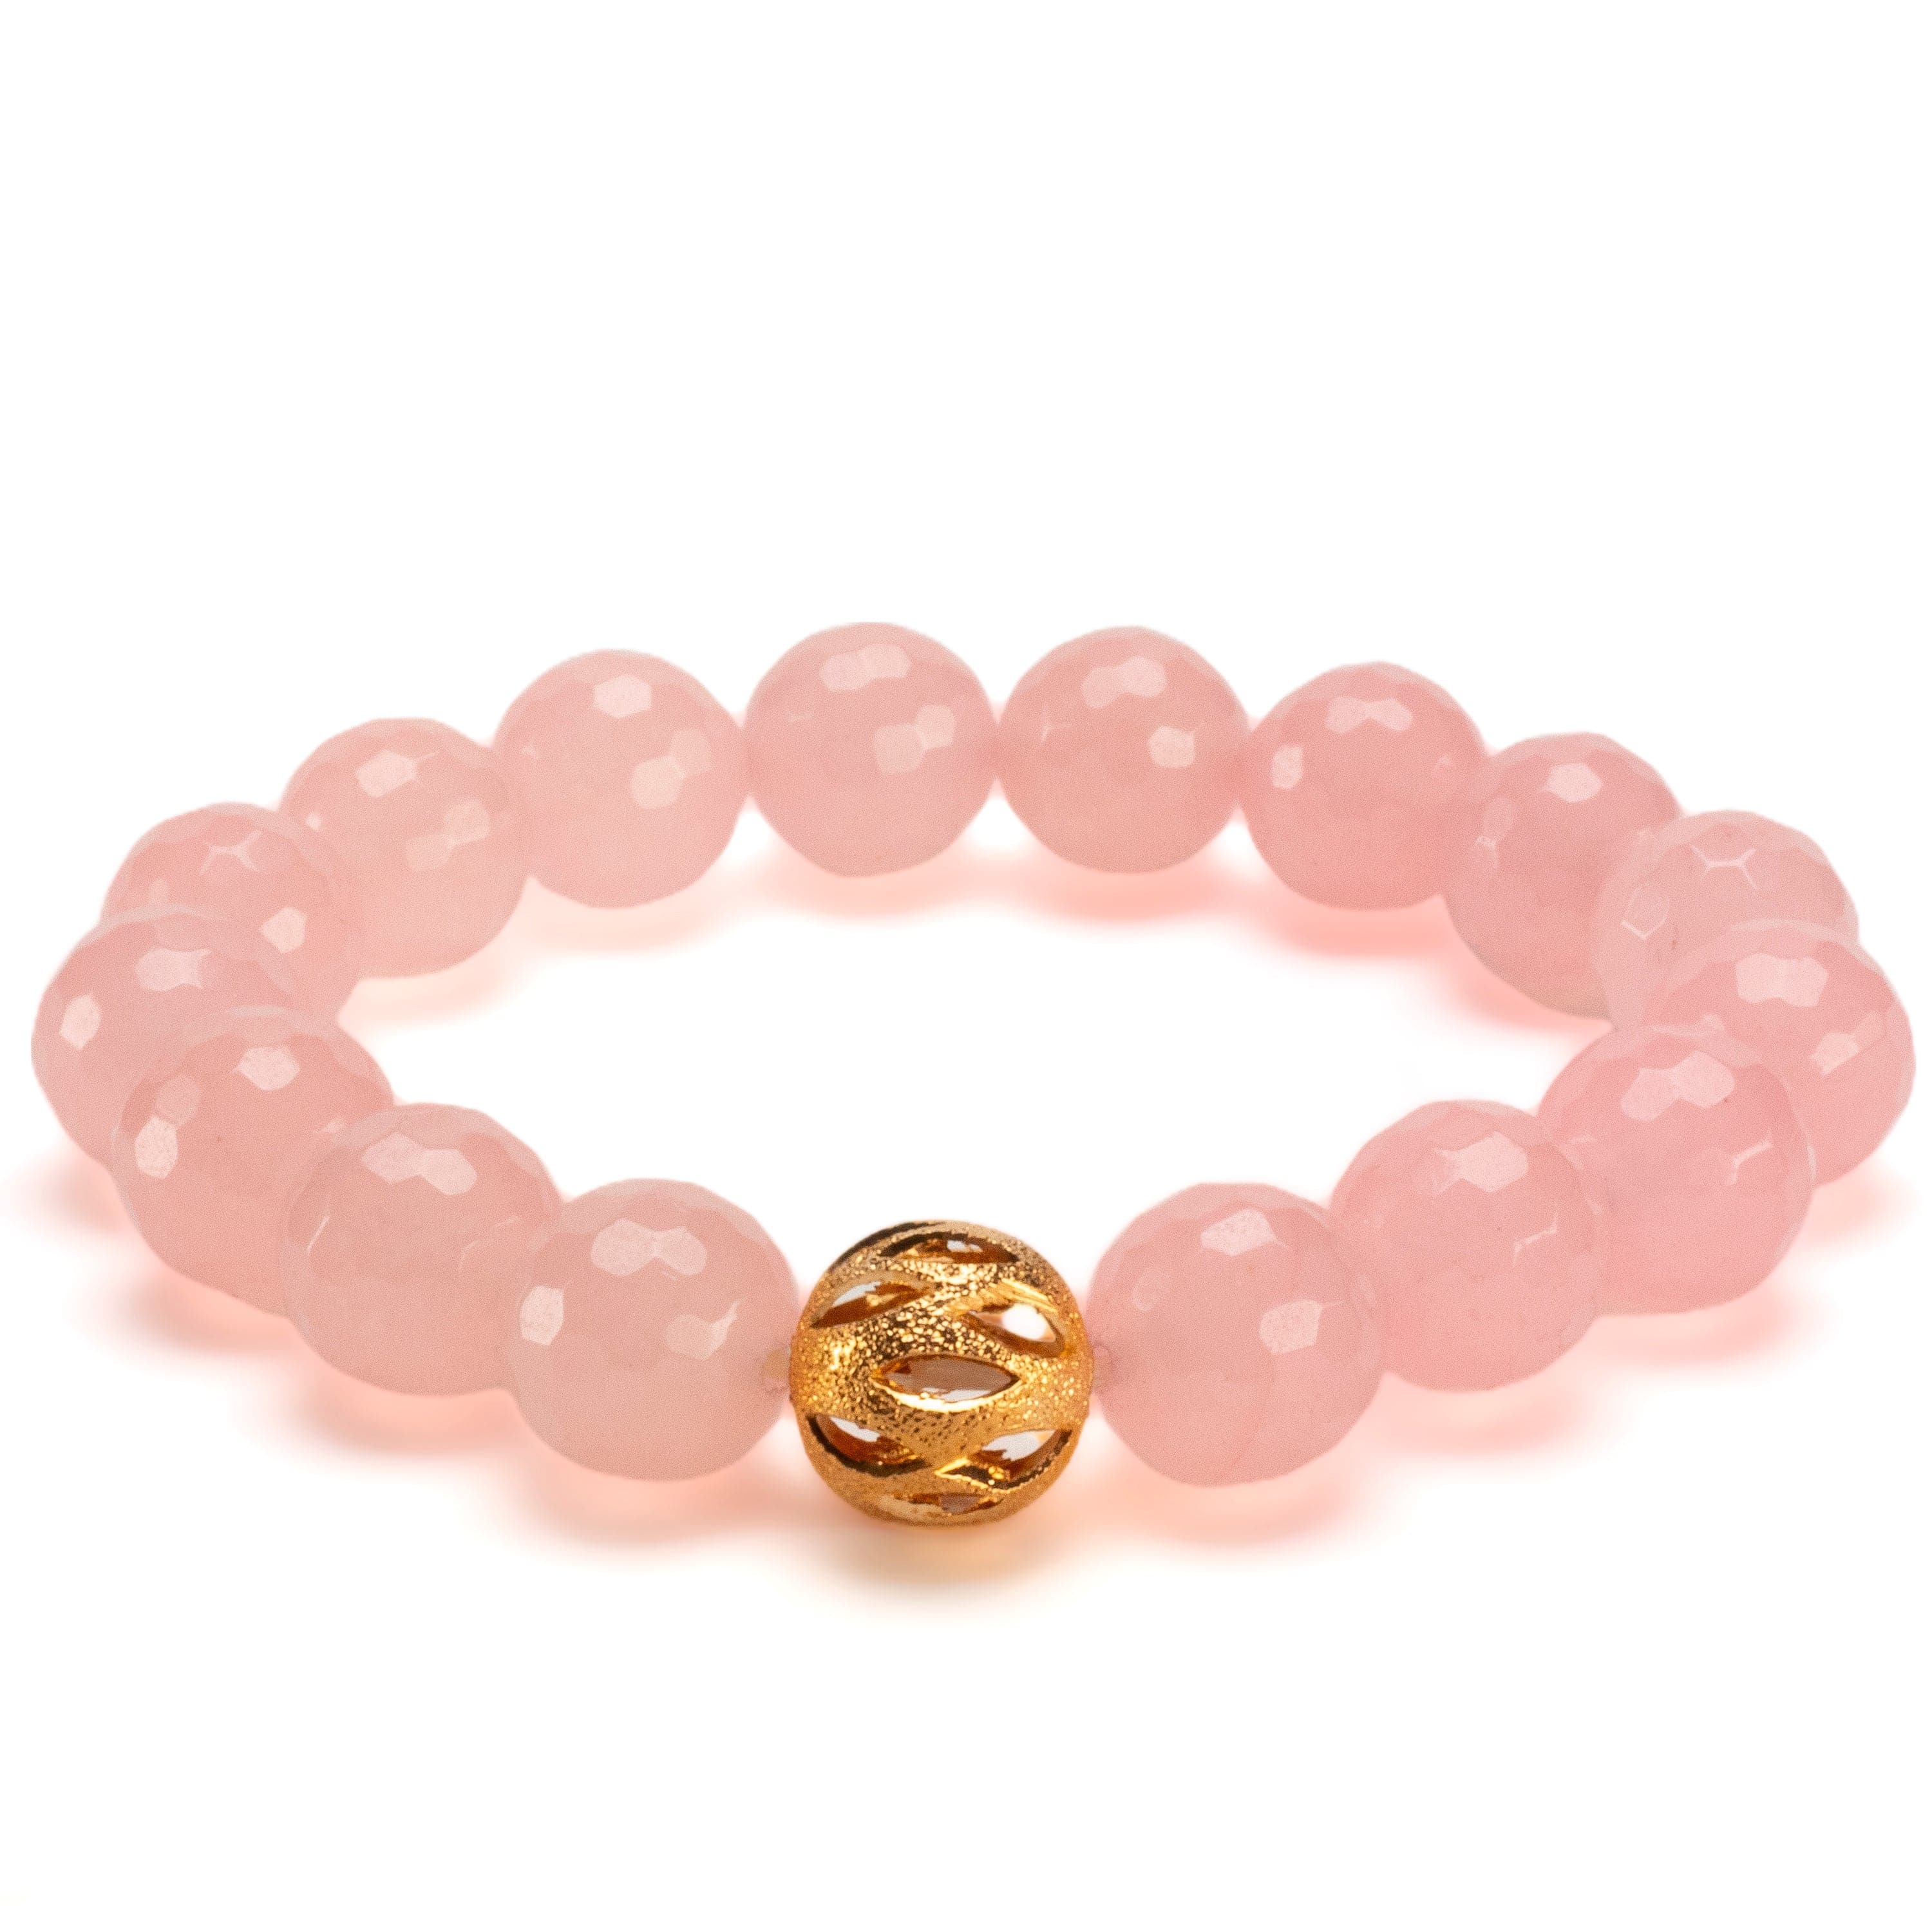 Kalifano Gemstone Bracelets Faceted Rose Quartz 12mm Gemstone Bead Elastic Bracelet with Gold Accent Bead GOLD-BGP-085